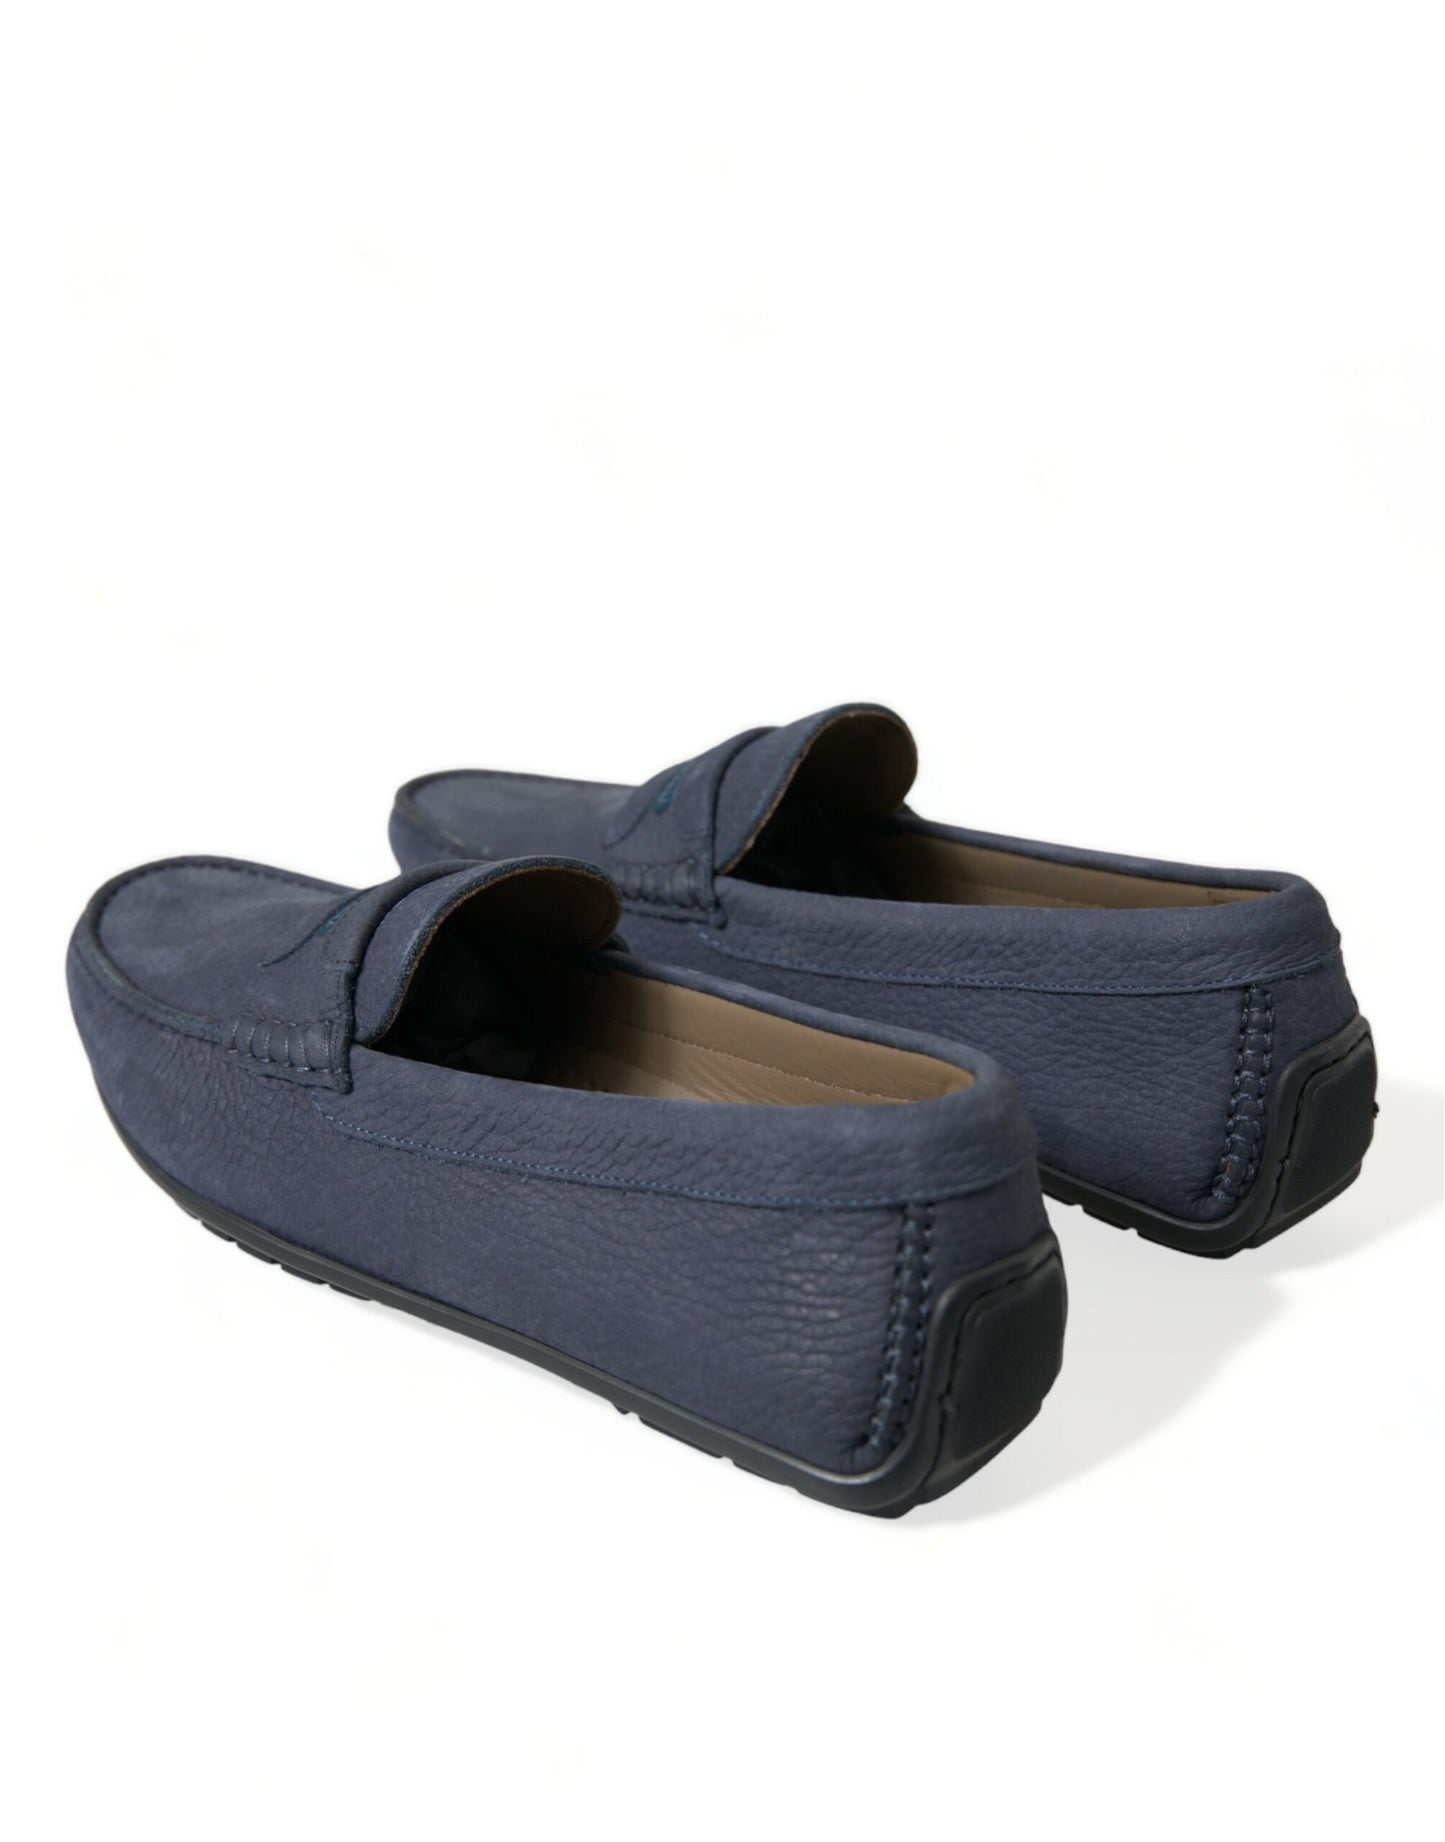 Elegant Blue Leather Moccasin Shoes